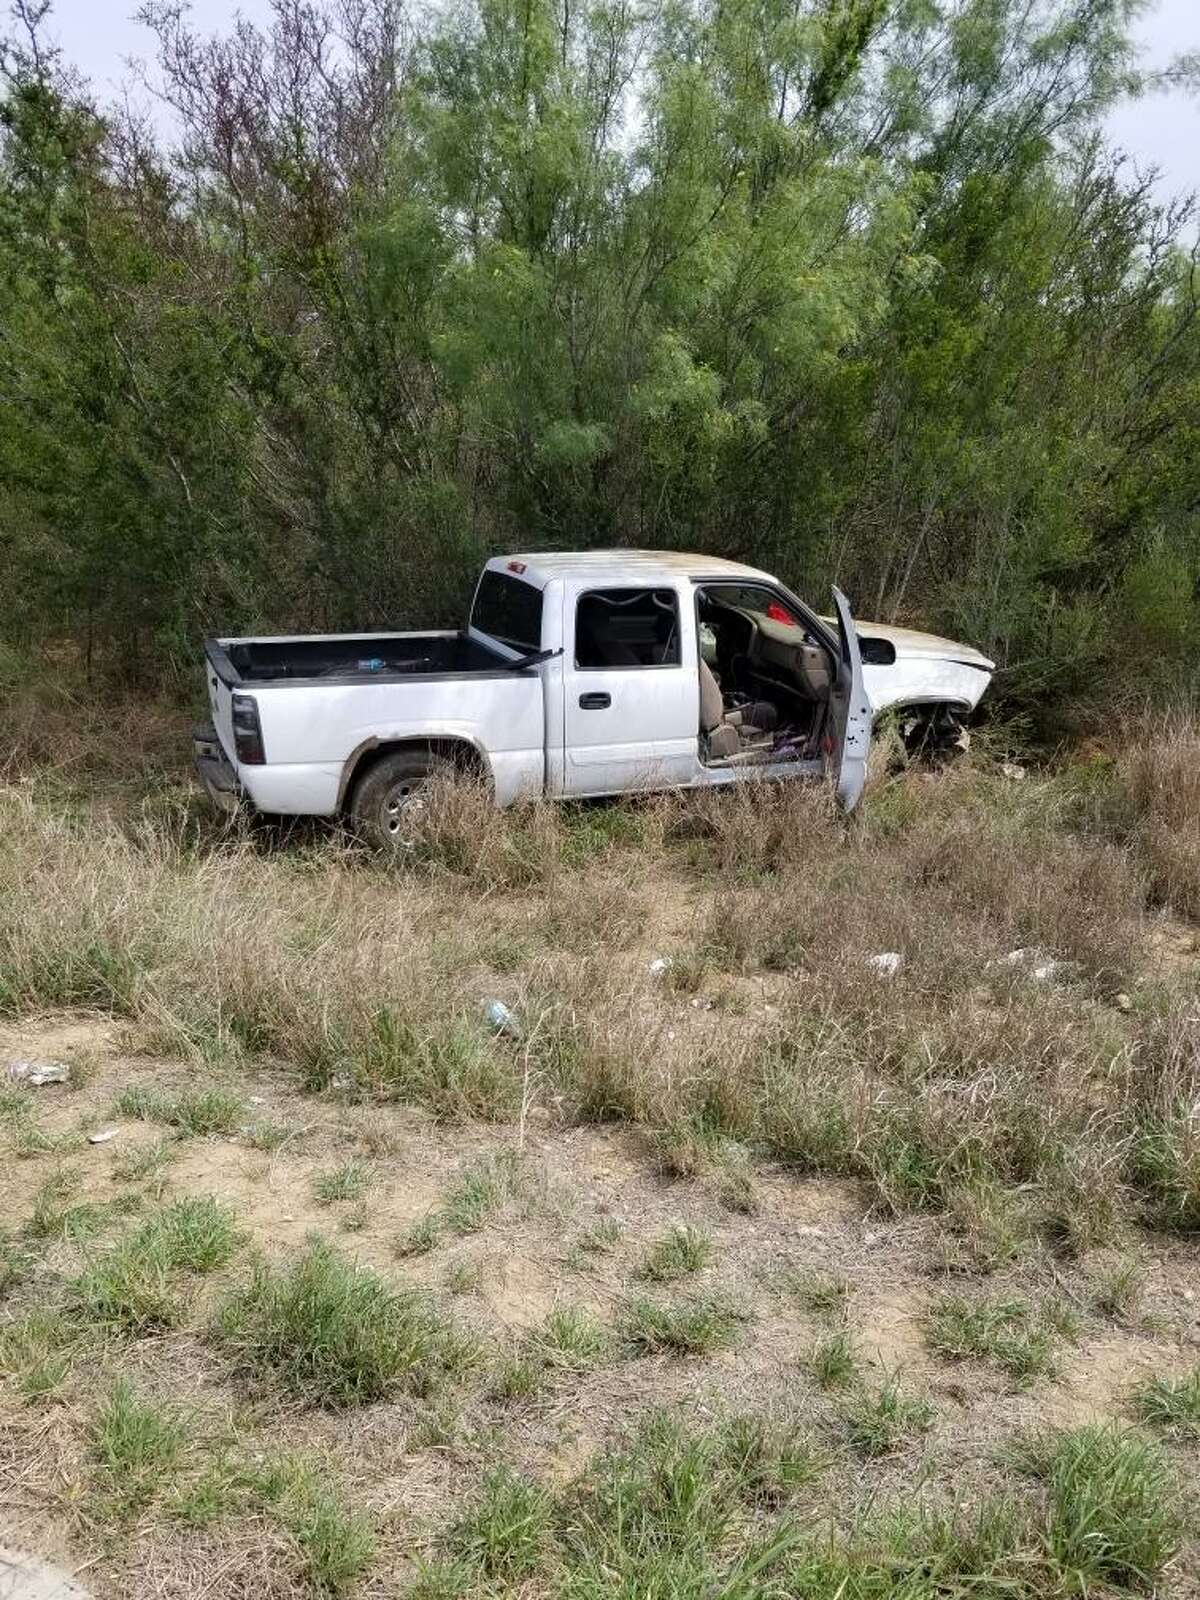 A man was taken to Laredo Medical Center in serious condition following a crash in south Laredo.